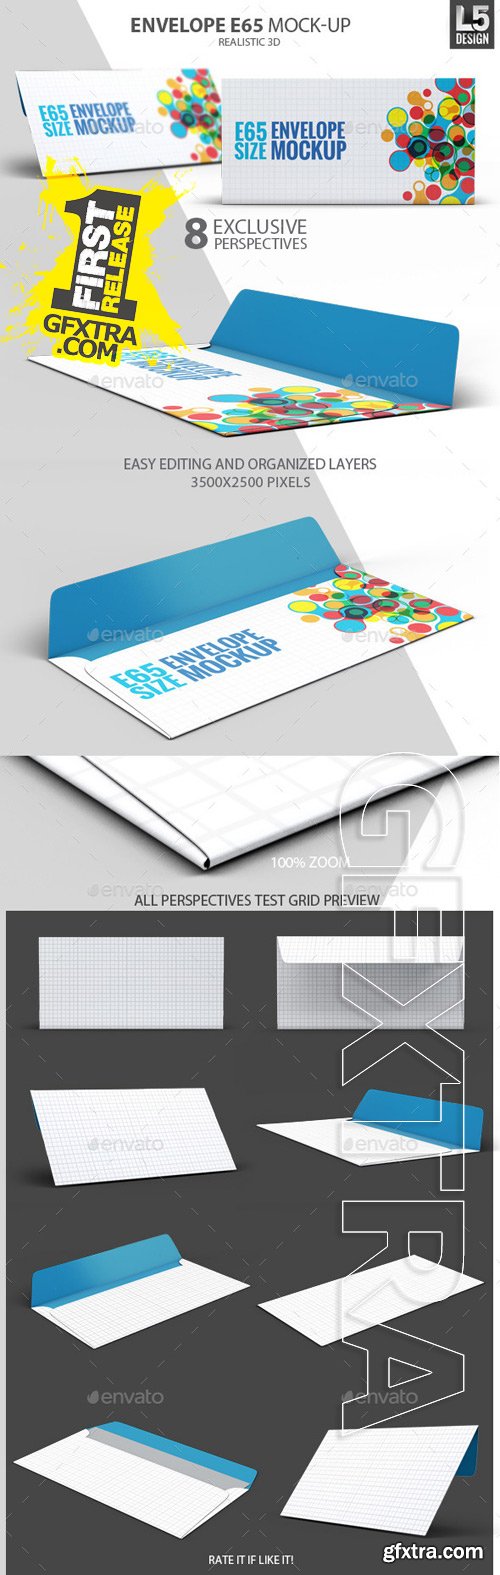 Graphicriver - Envelope E65 Mock-Up 10415761